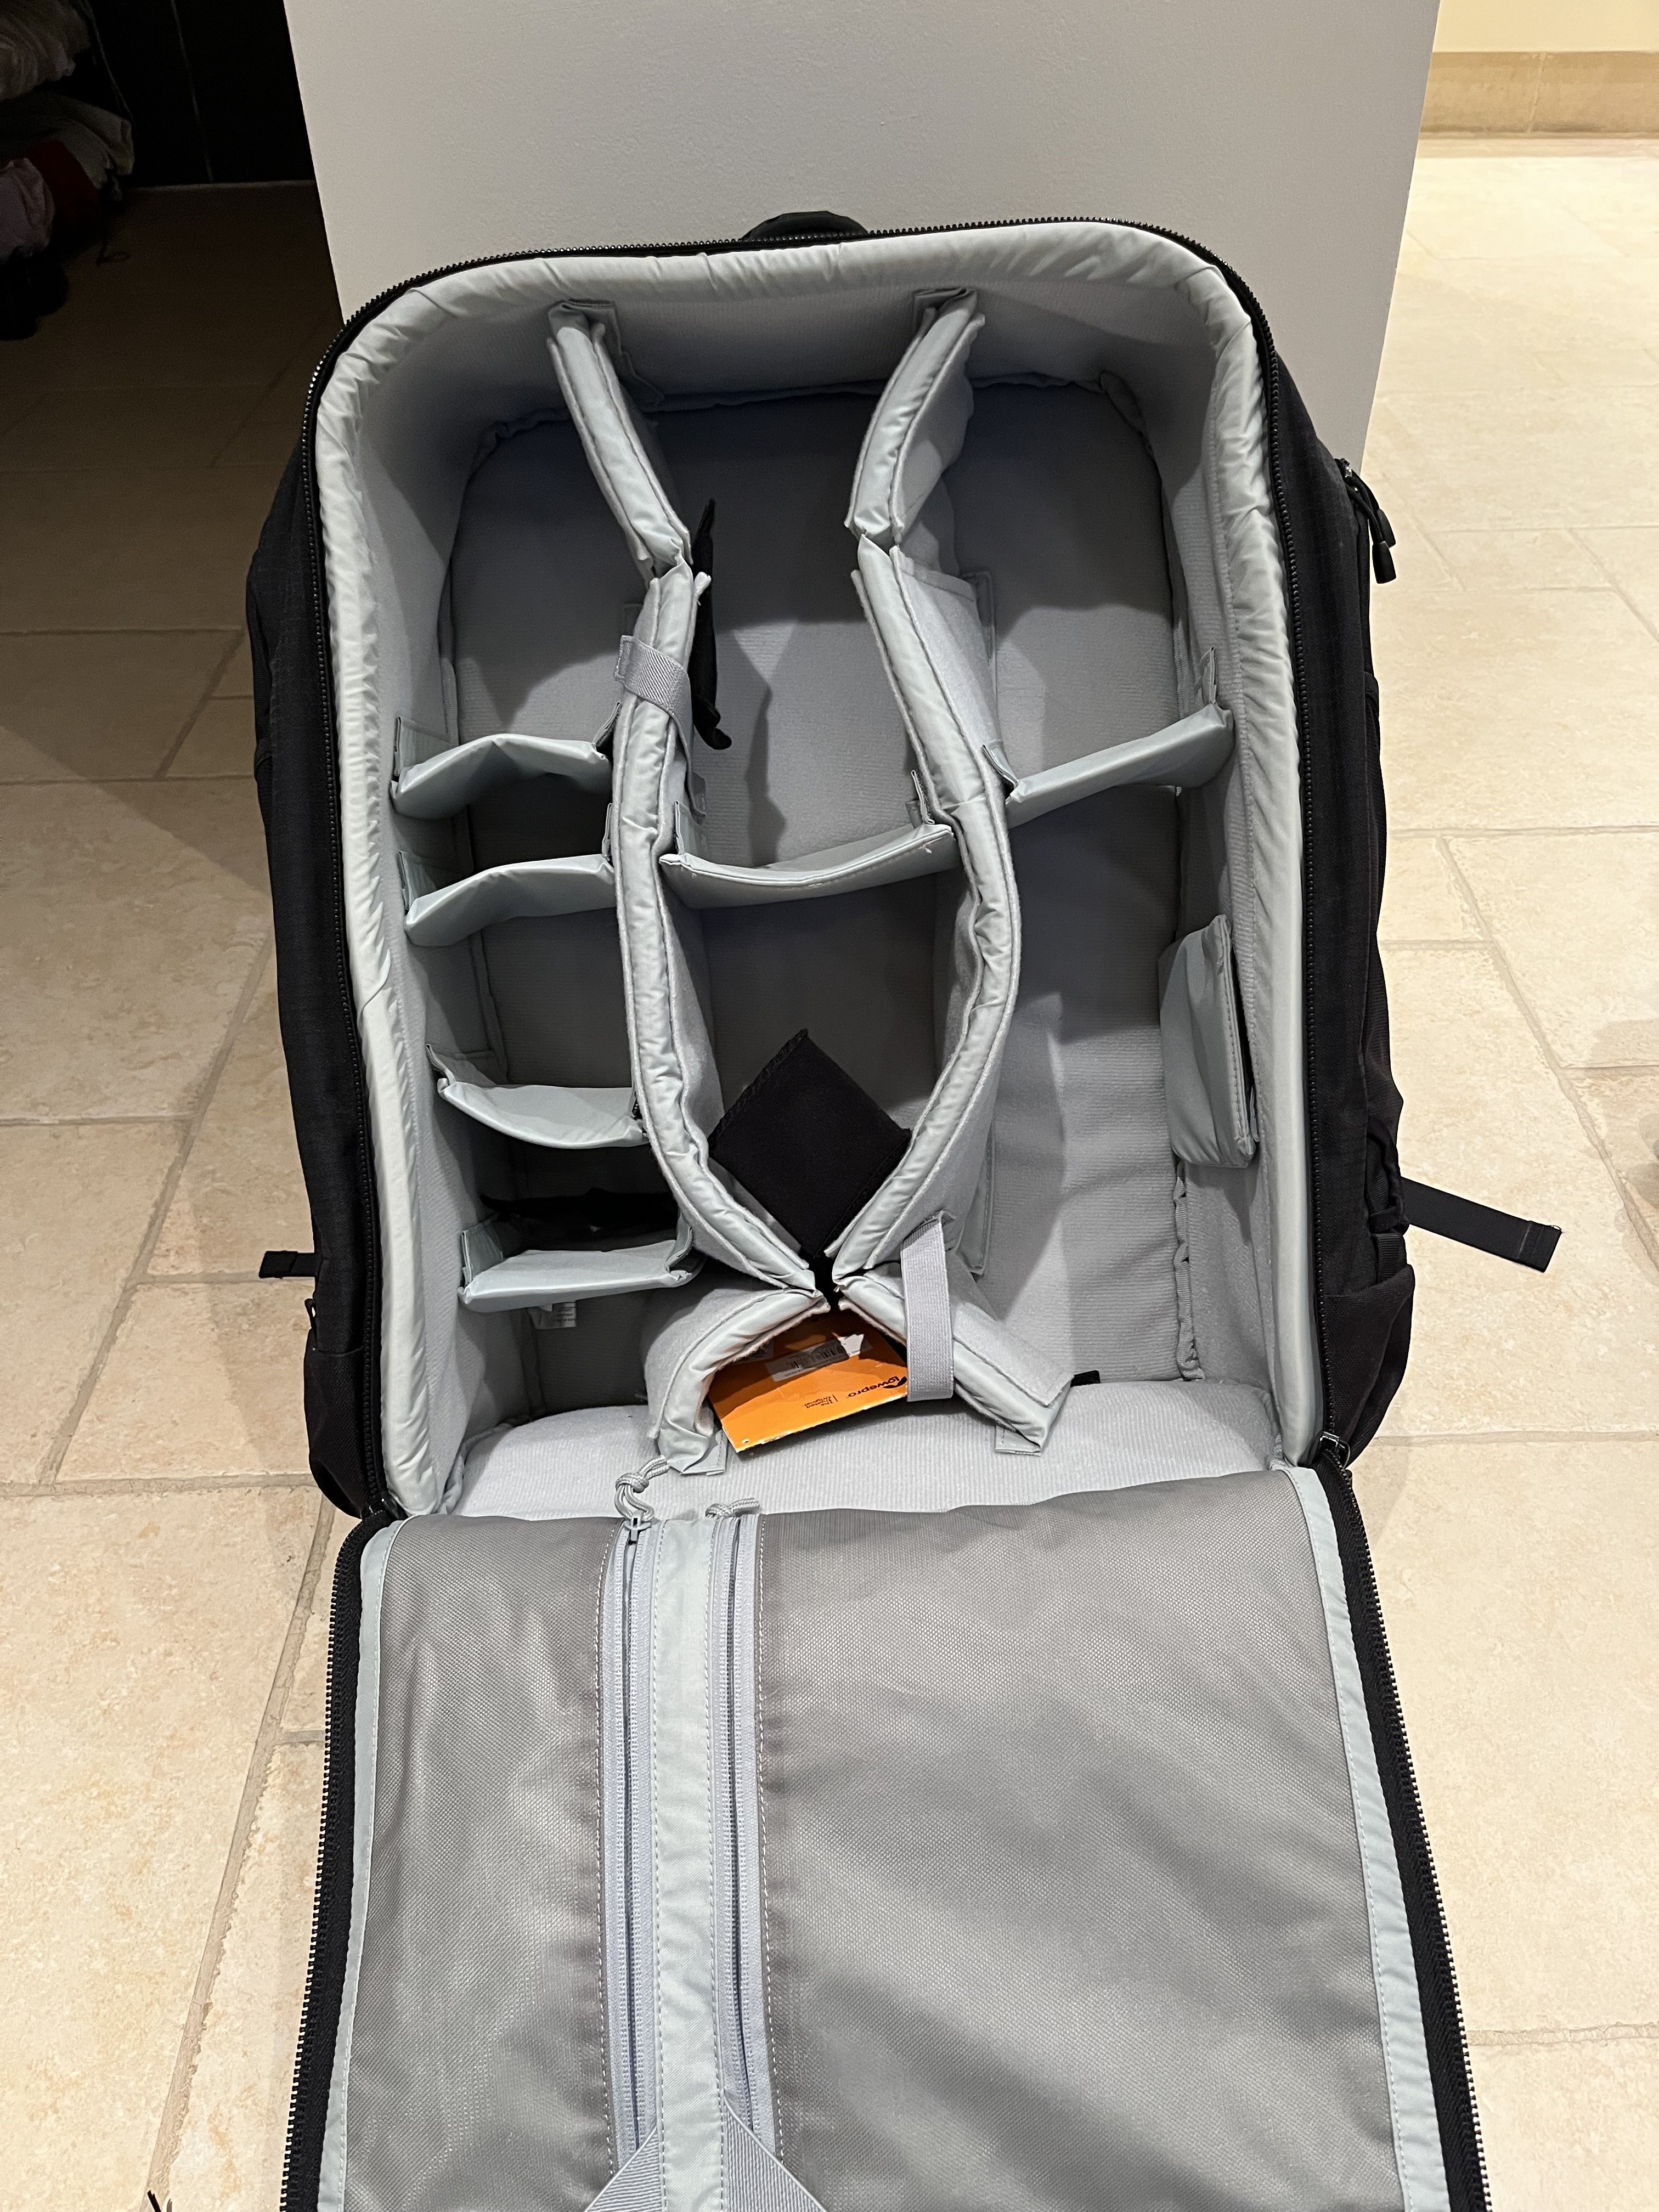 Lowepro Pro Trekker 650 AW bag